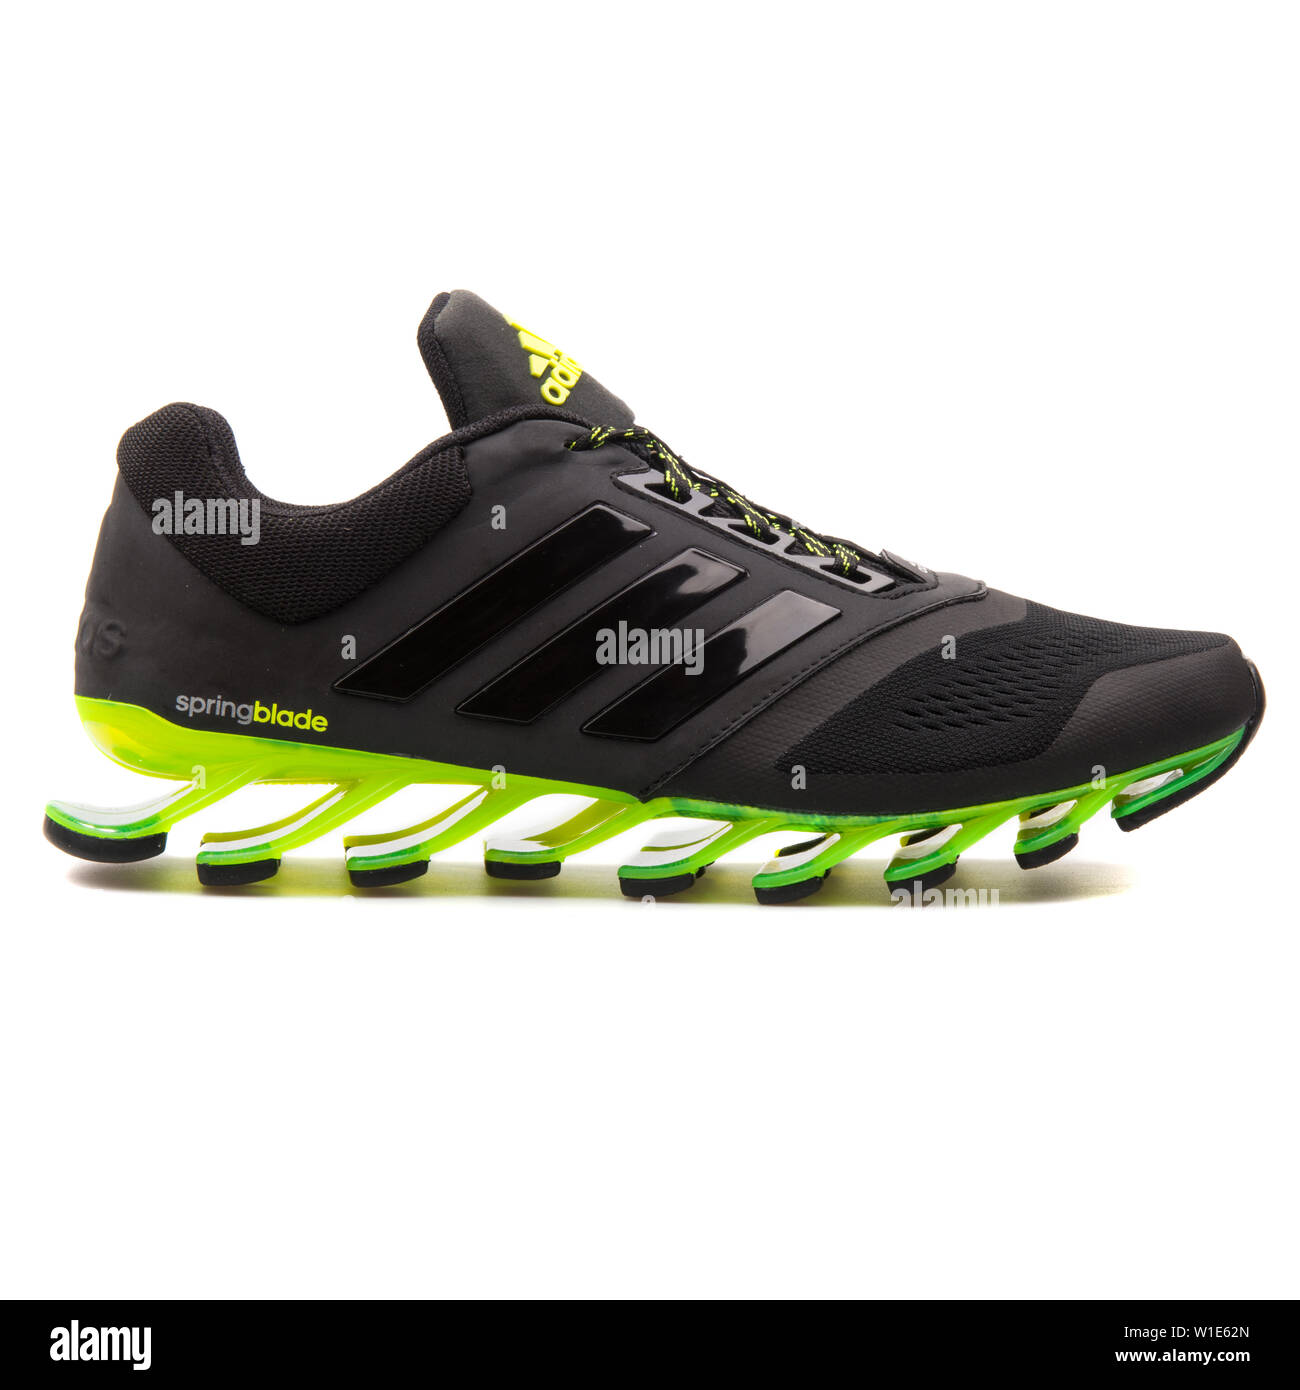 Adidas running shoes Imágenes stock - Página 2 - Alamy